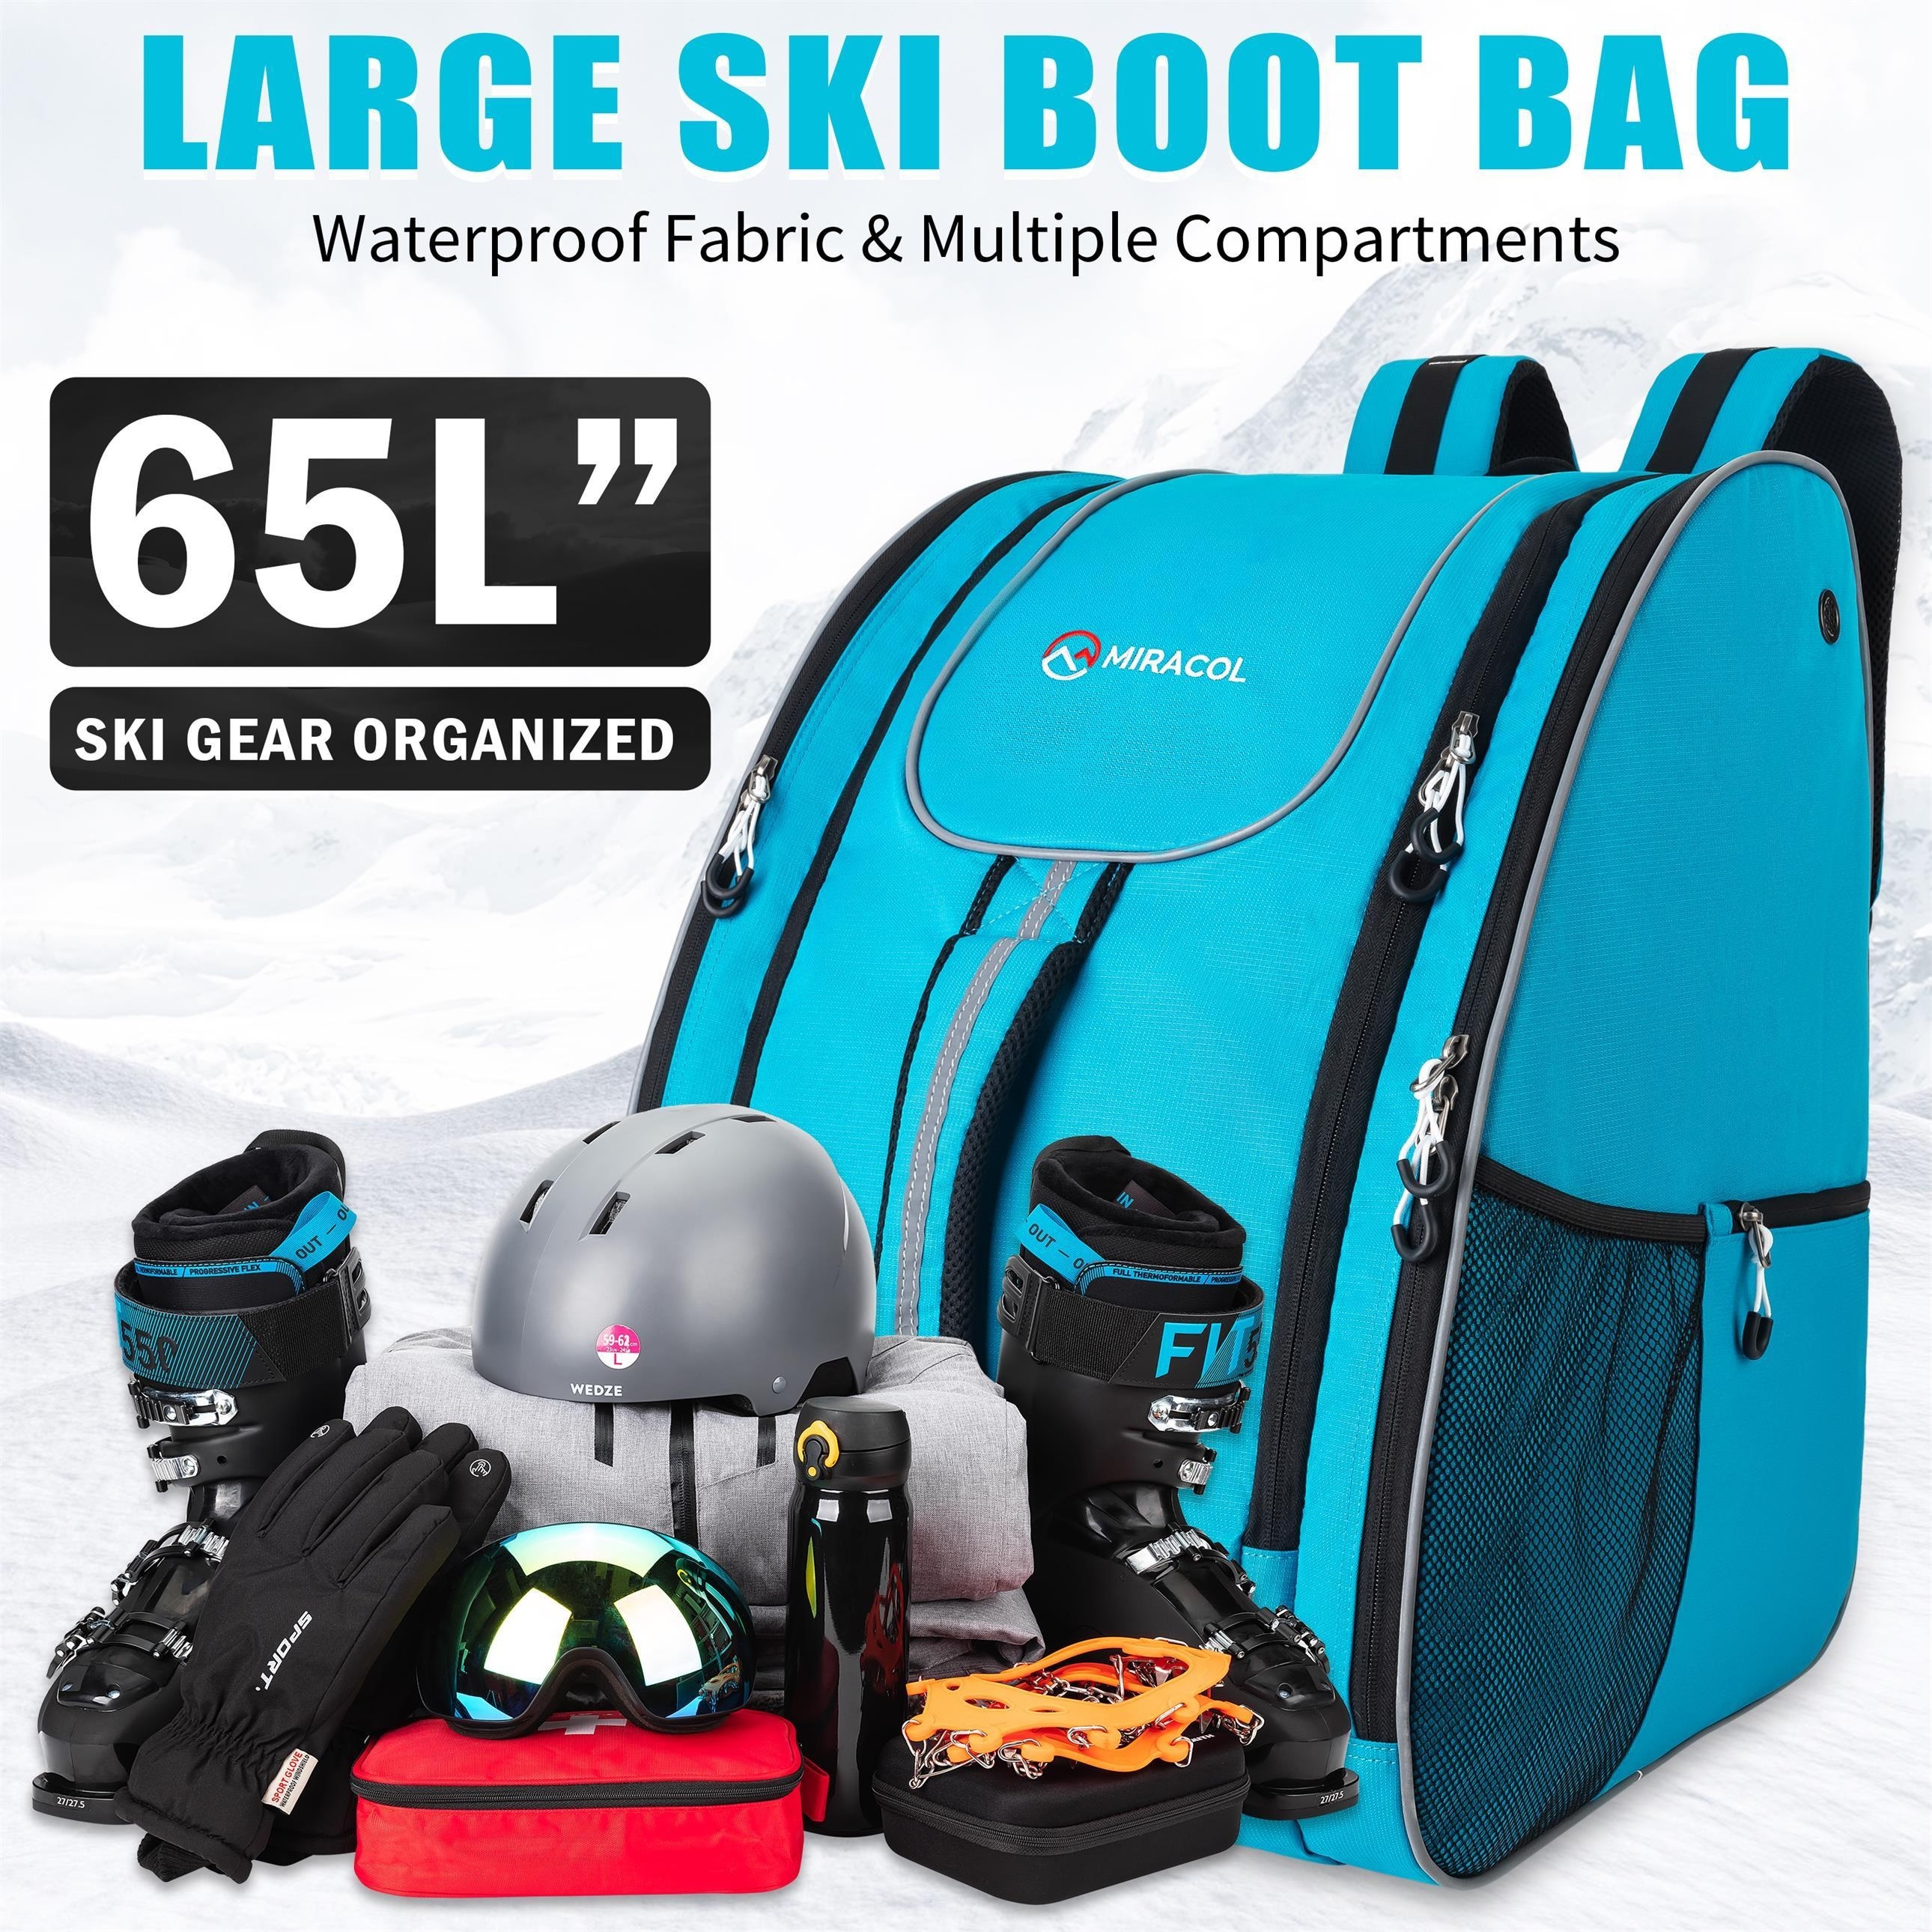  Extremus Bolsa para botas de esquí, mochila impermeable para  botas de esquí de 65 litros para organizar botas de esquí, casco, gafas,  guantes, ropa, equipaje de esquí de gran capacidad para